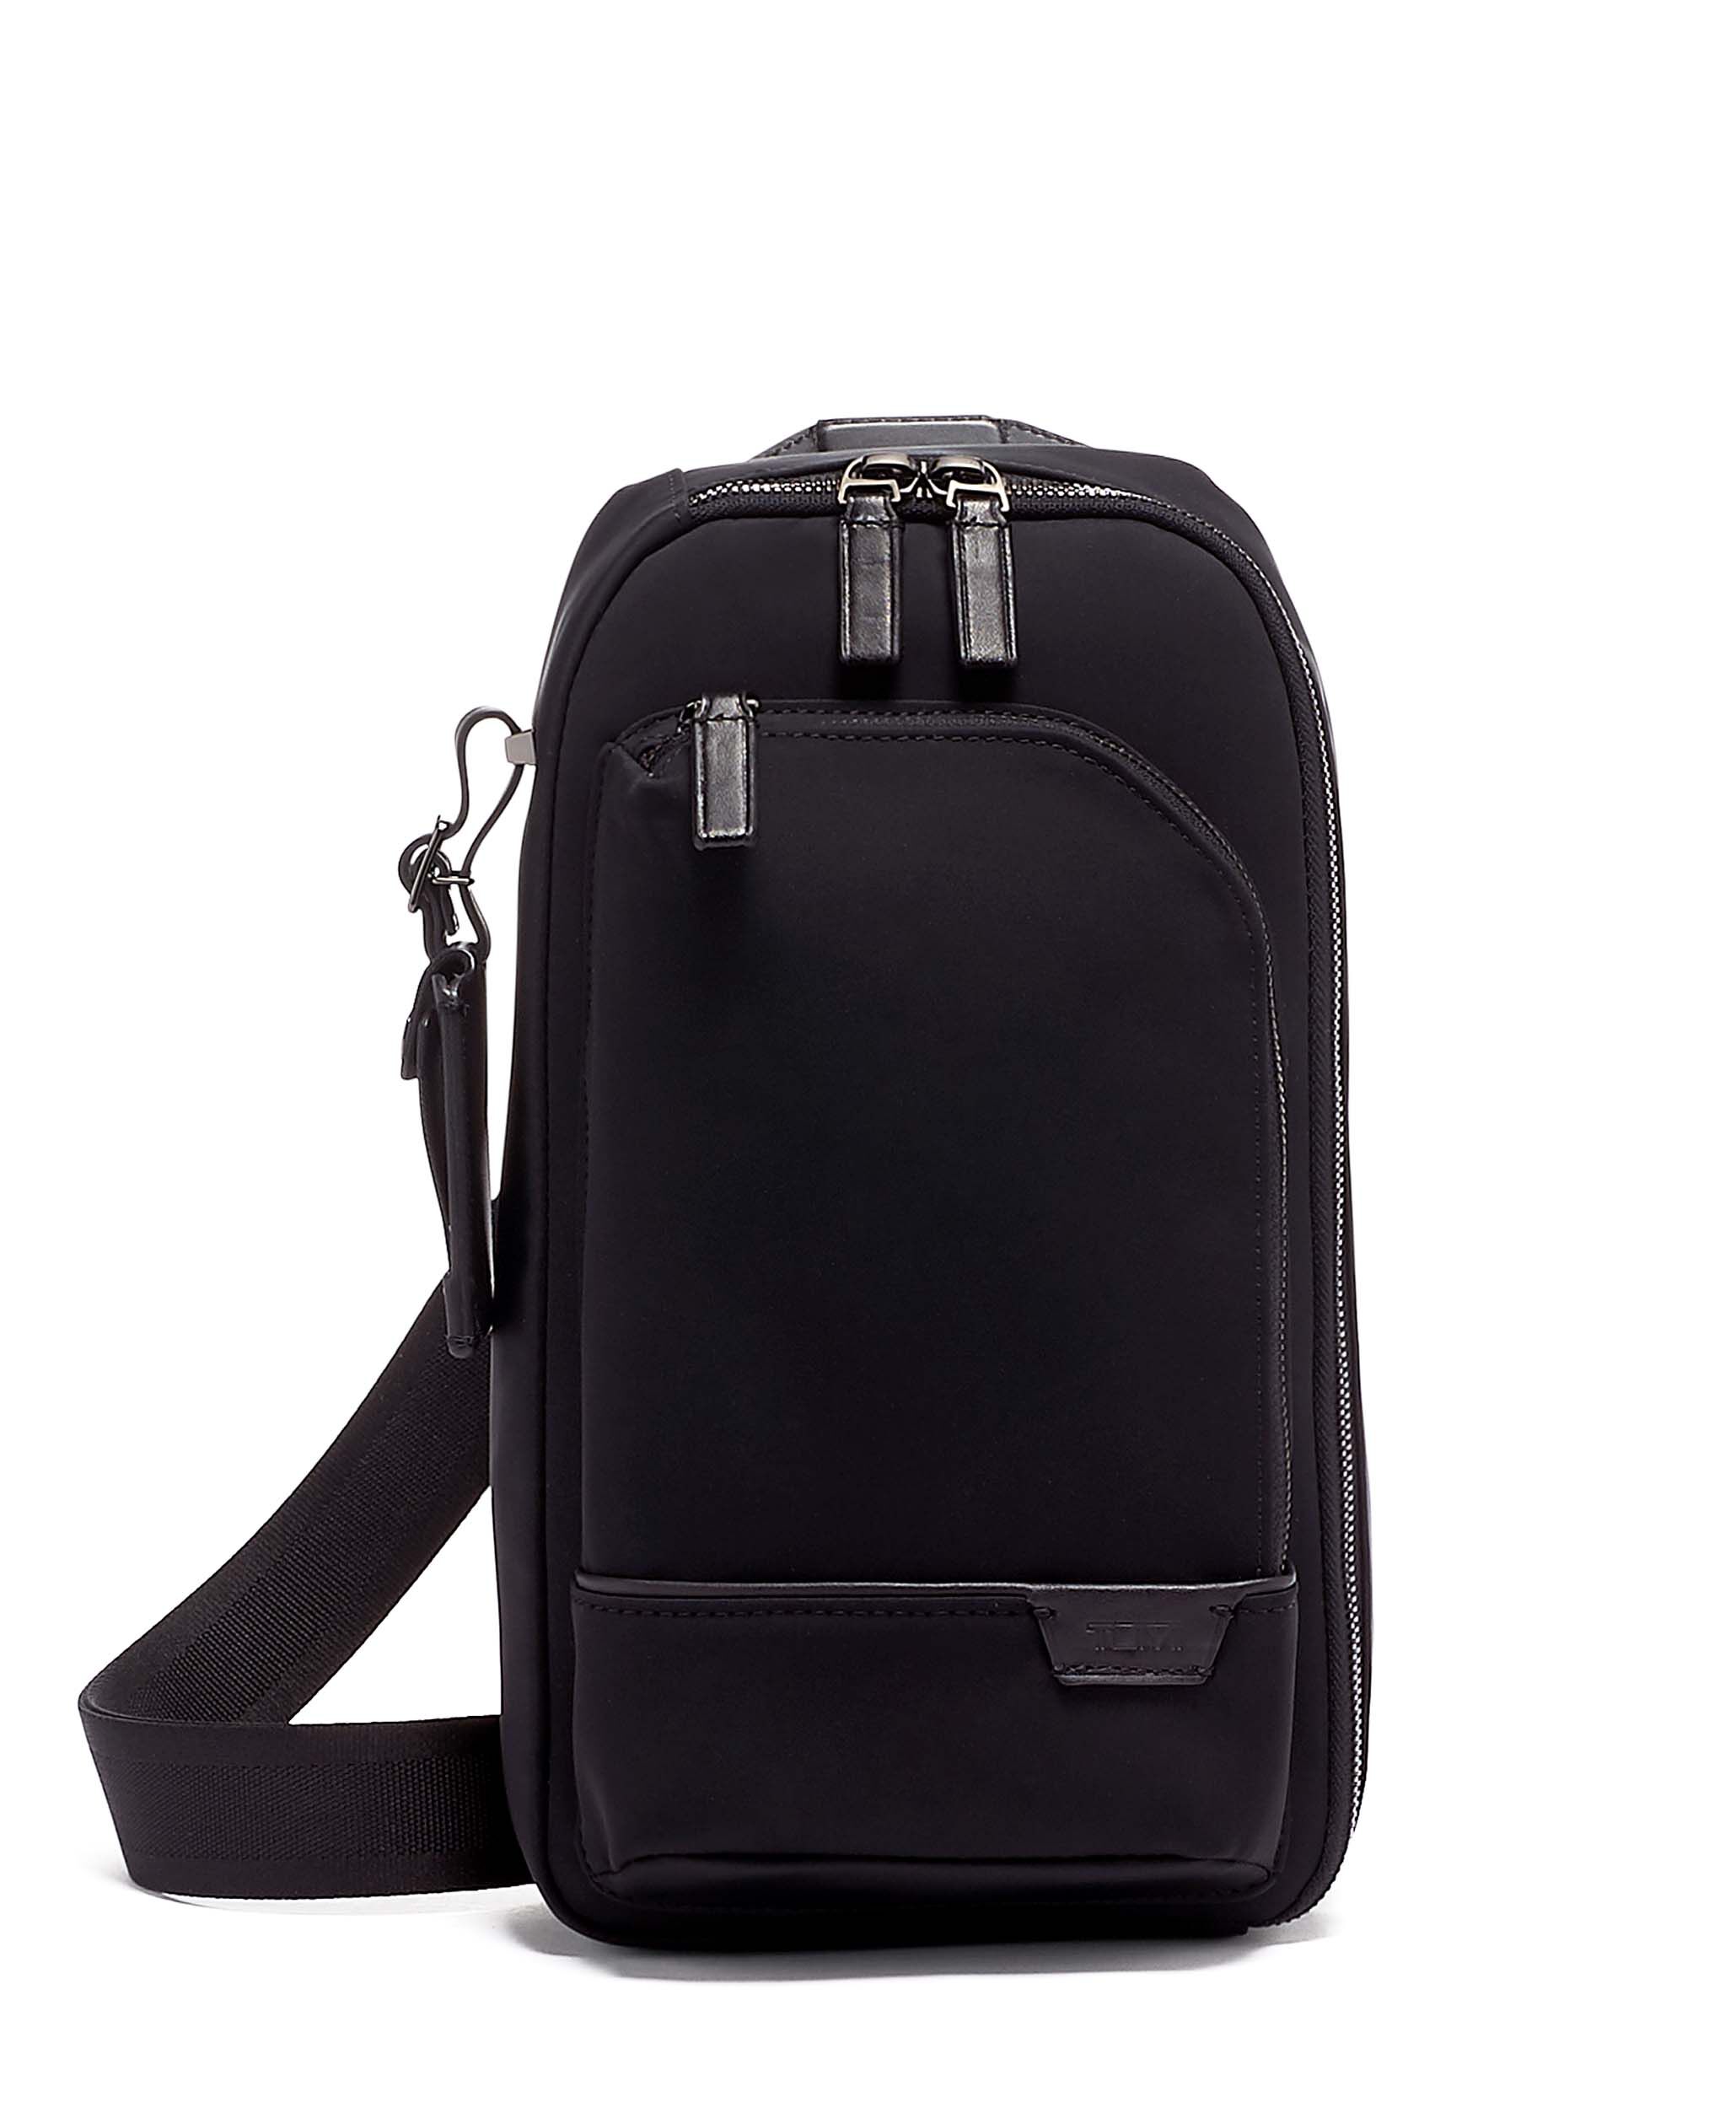 NEW Gregory one shoulder official switch sling Black Bag genuine from JAPAN 